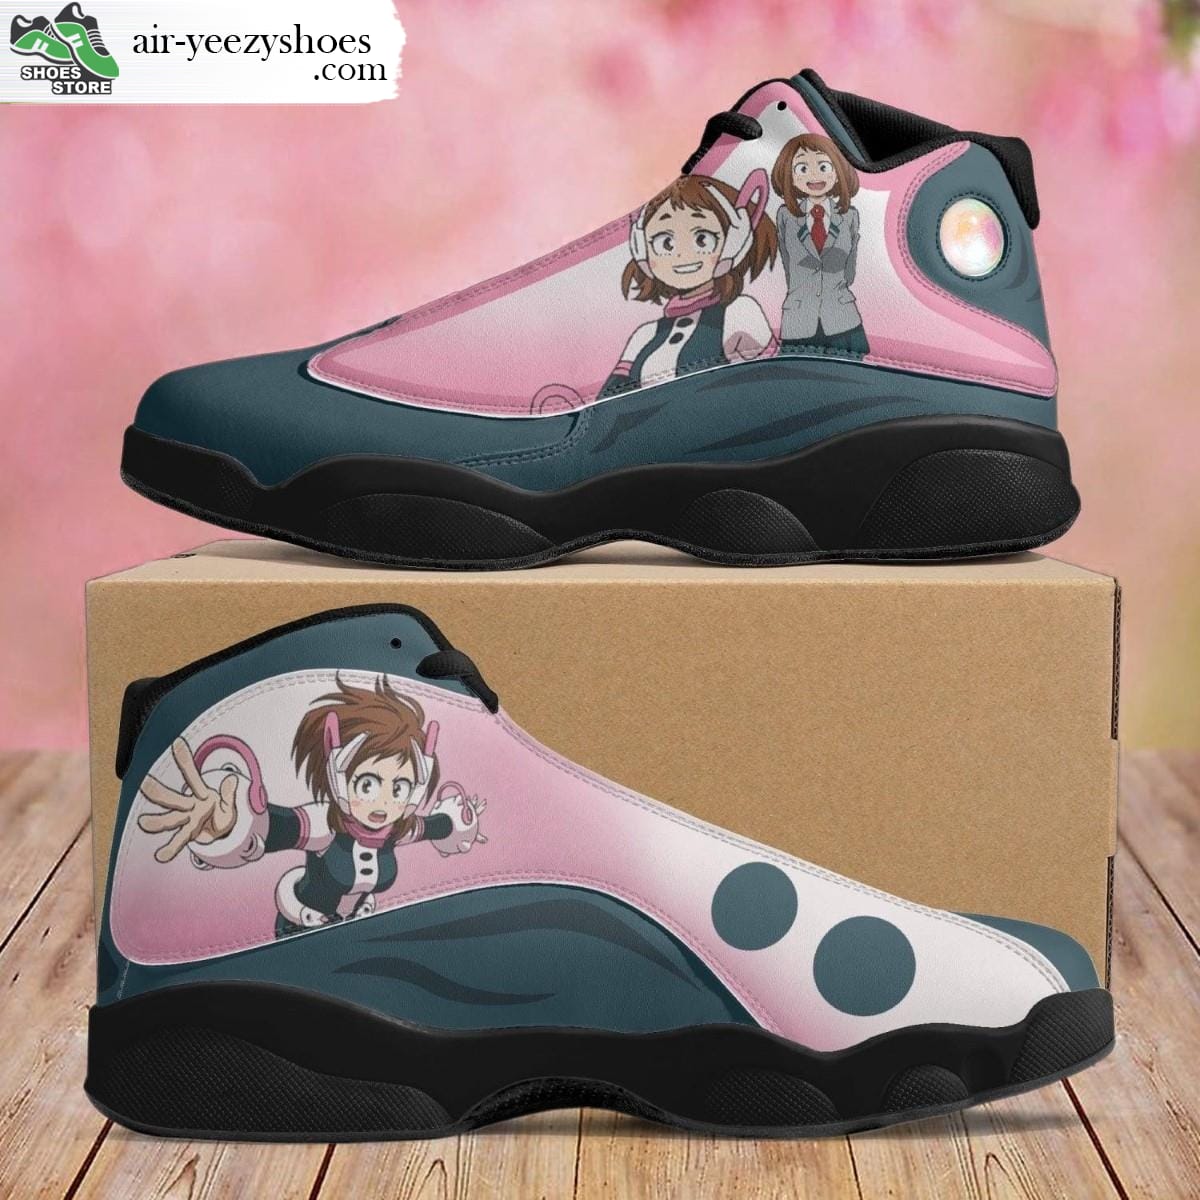 Uraraka Ochaco Jordan 13 Shoes, My Hero Academia Gift